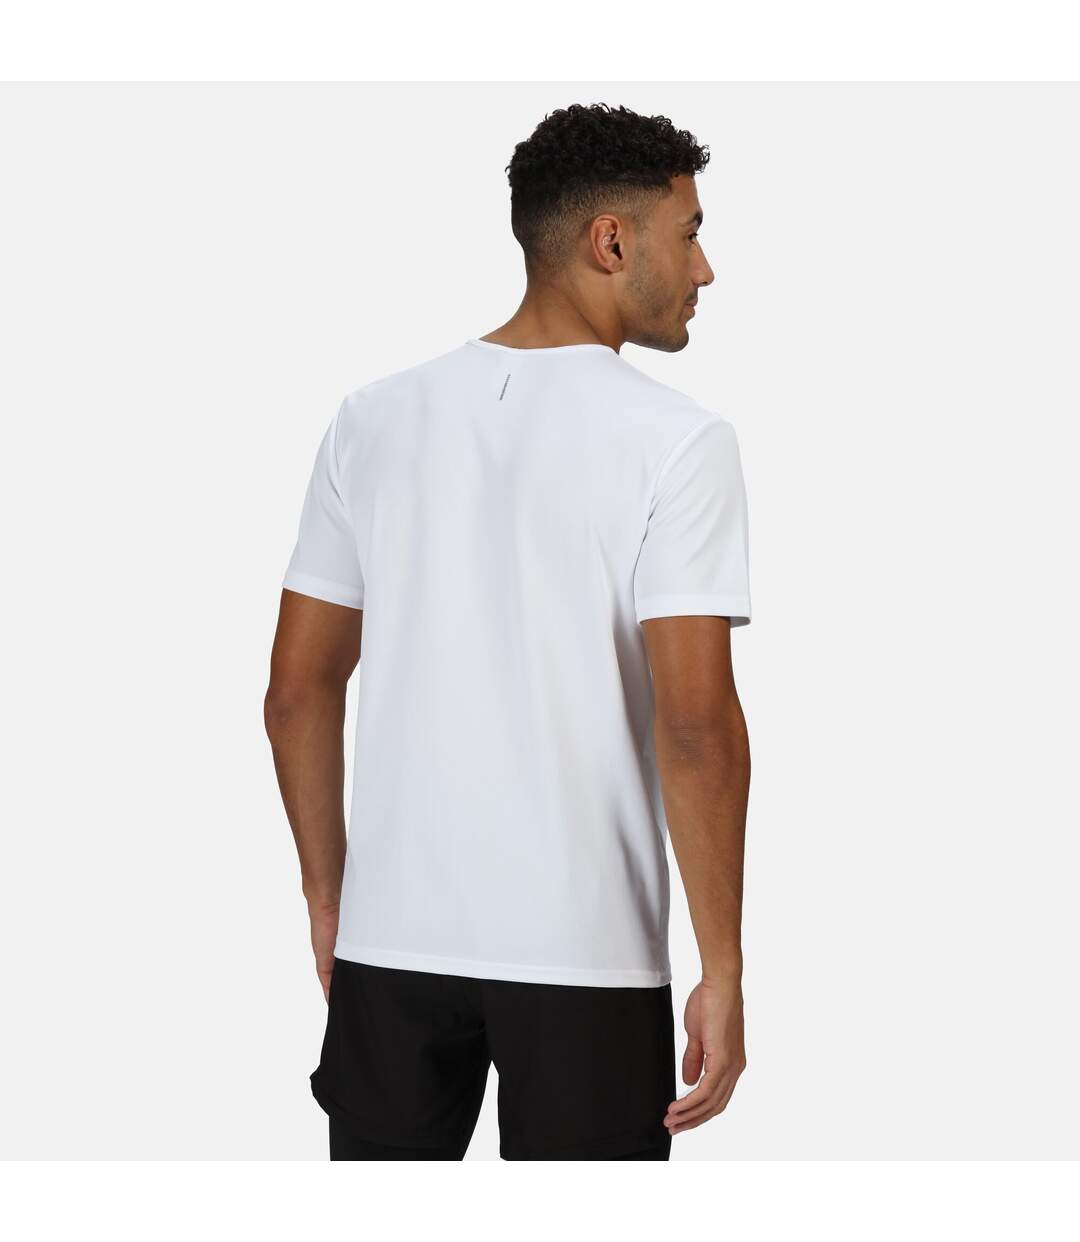 Regatta - T-shirt TORINO - Hommes (Blanc) - UTRG4091